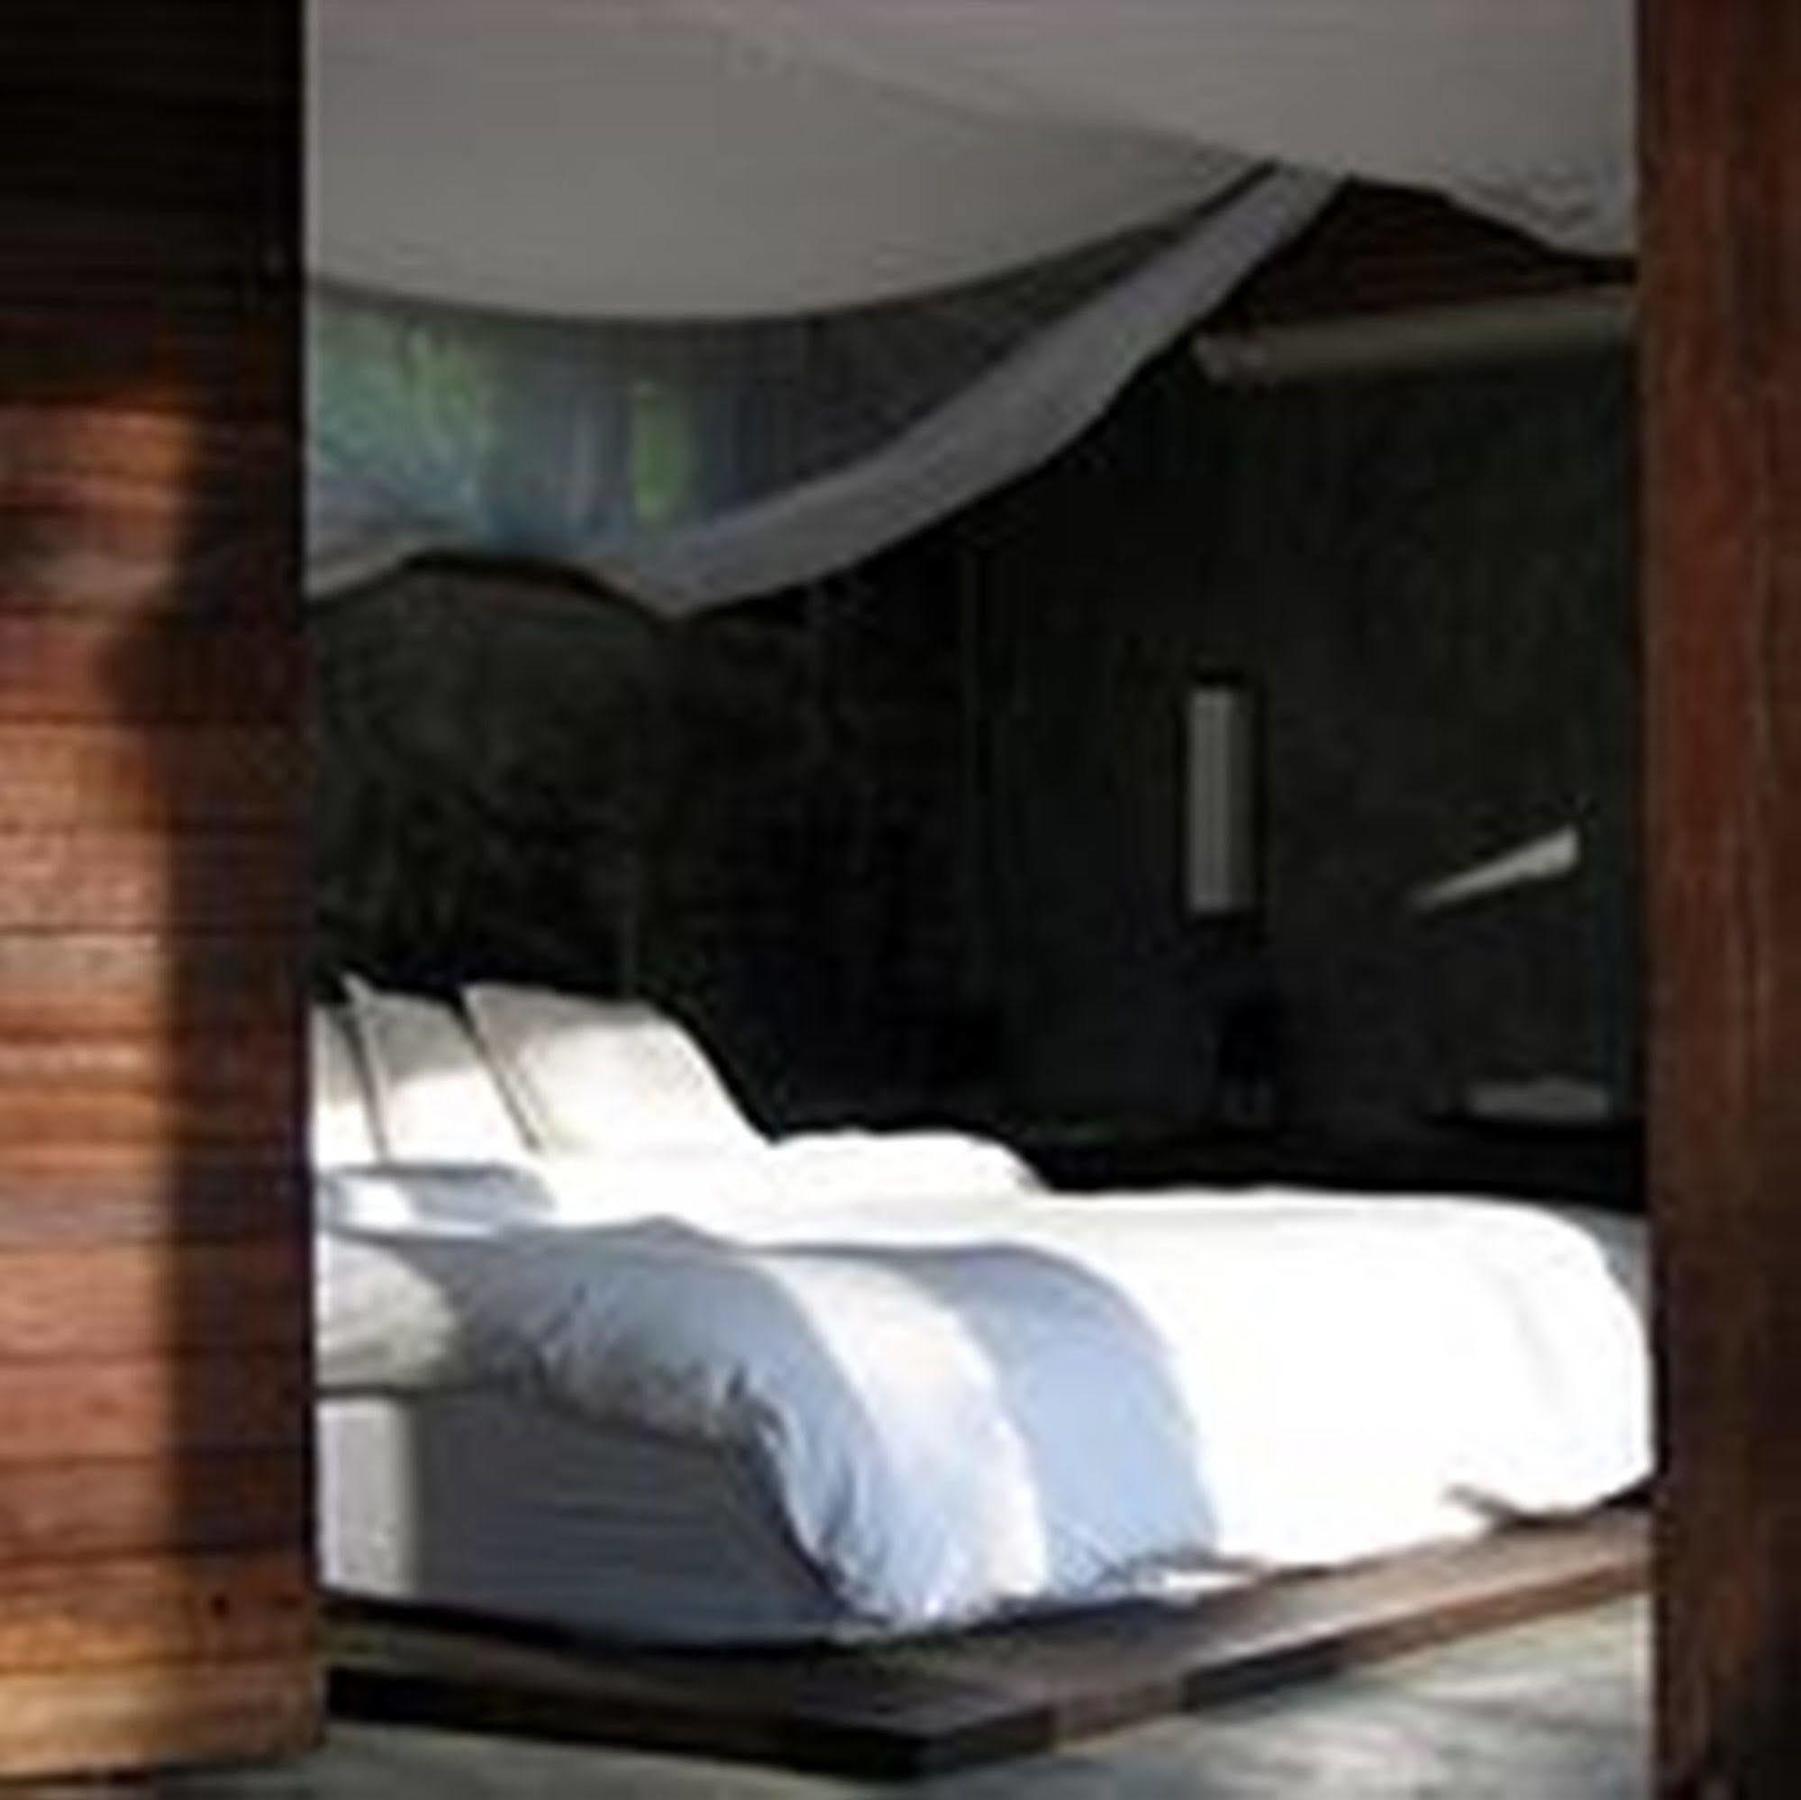 Costa Lanta - Adult Only Hotel Ko Lanta Esterno foto